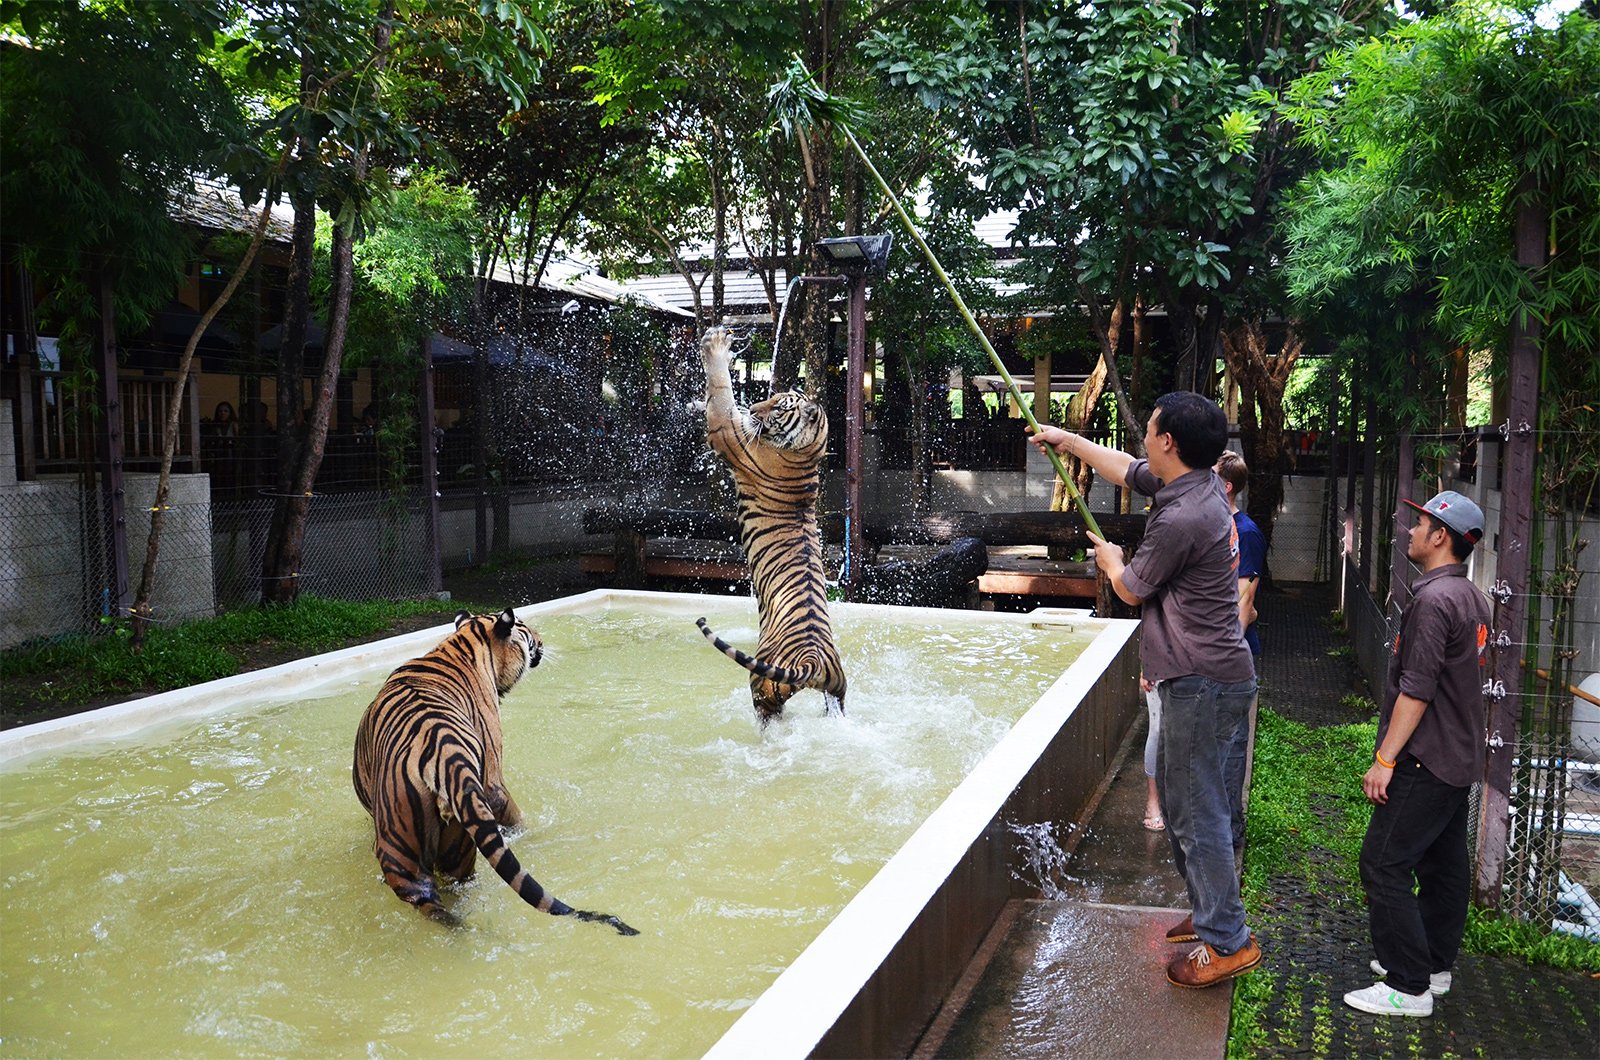 The Tiger Kingdom zoo, Phuket